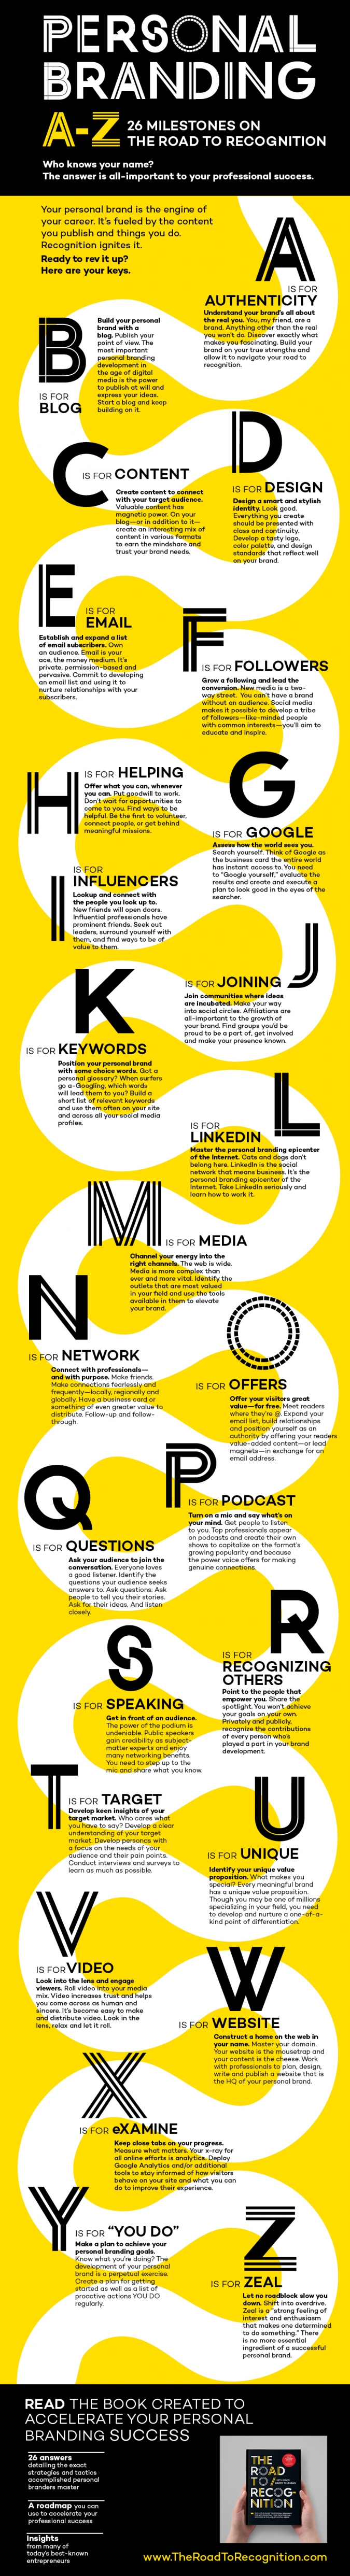 Personal Branding via Social Media – Interesse und Bekanntheit am Unternehmen via Social Media steigern [Infografik]